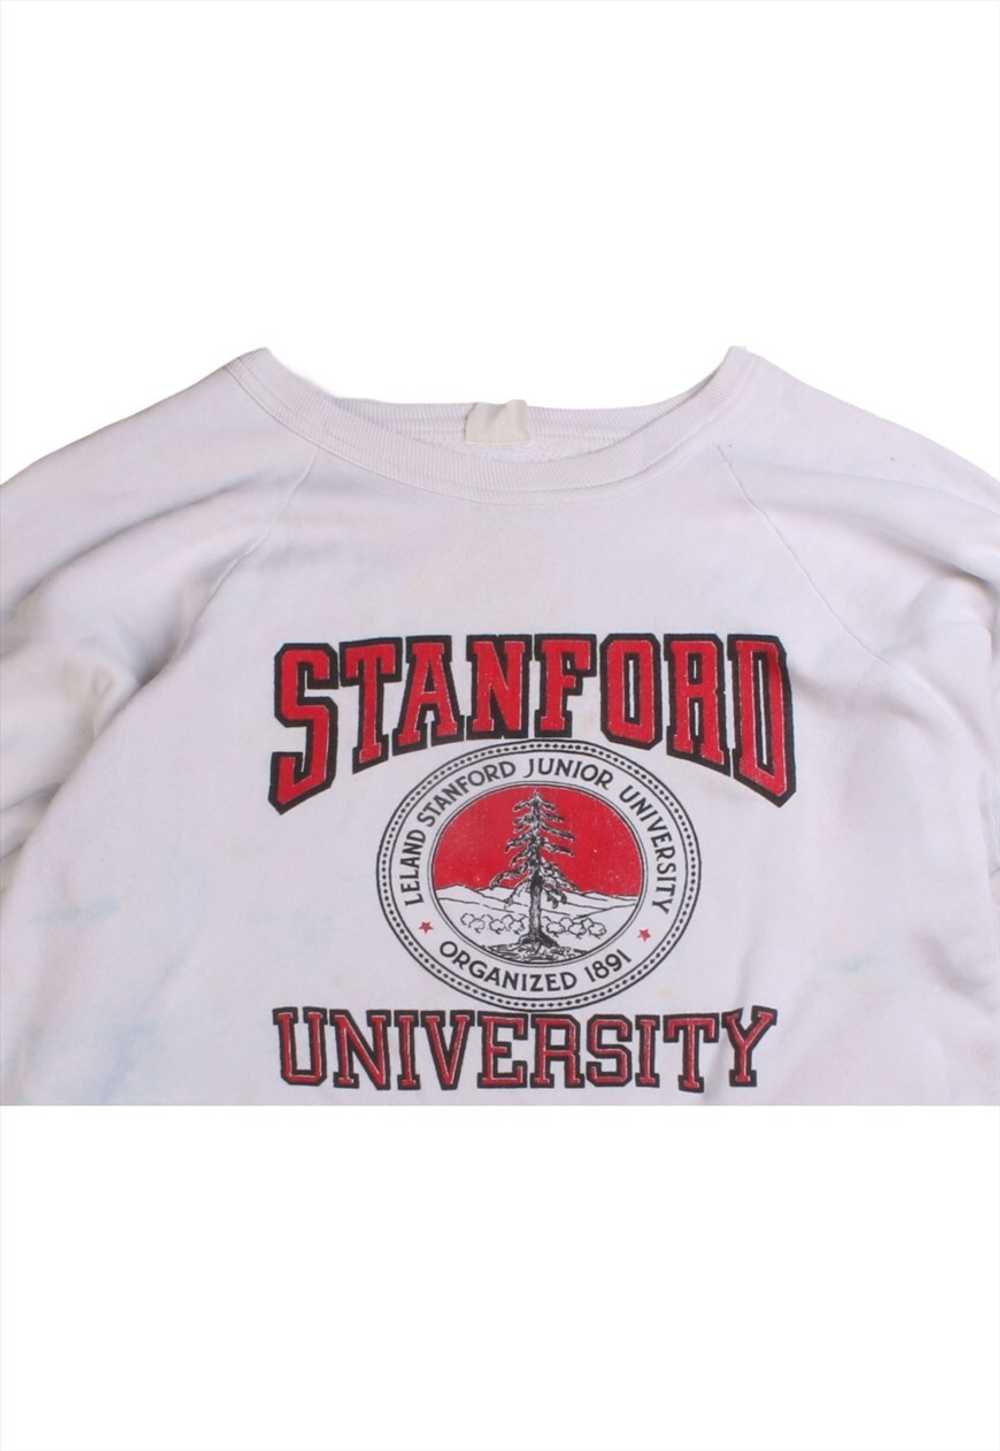 Vintage 90's Stanford Sweatshirt Stanford Univers… - image 4